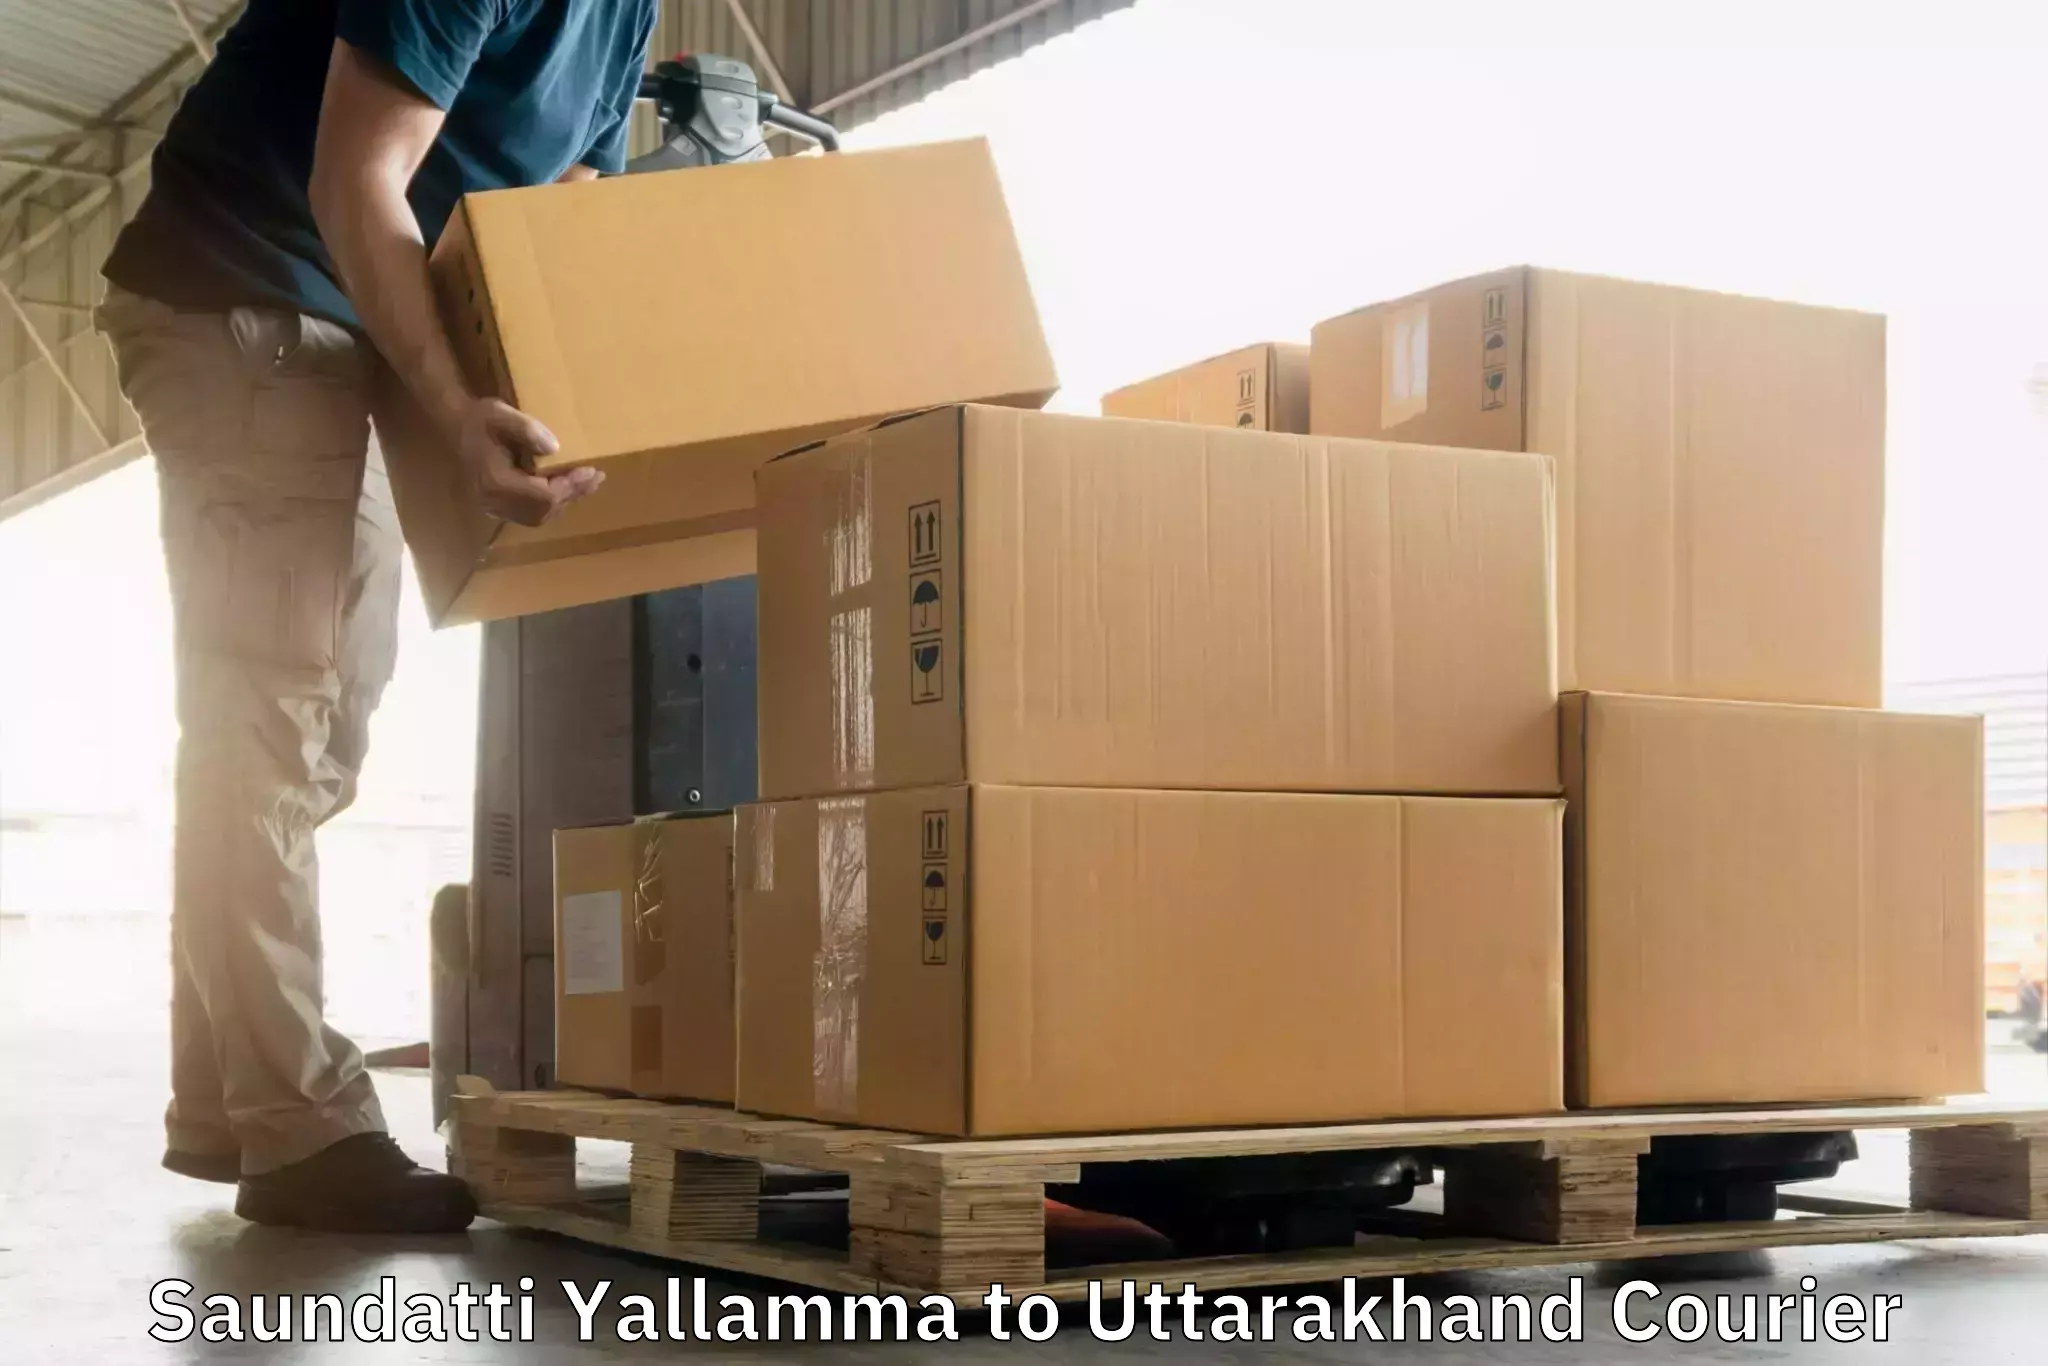 Urgent courier needs Saundatti Yallamma to Rishikesh